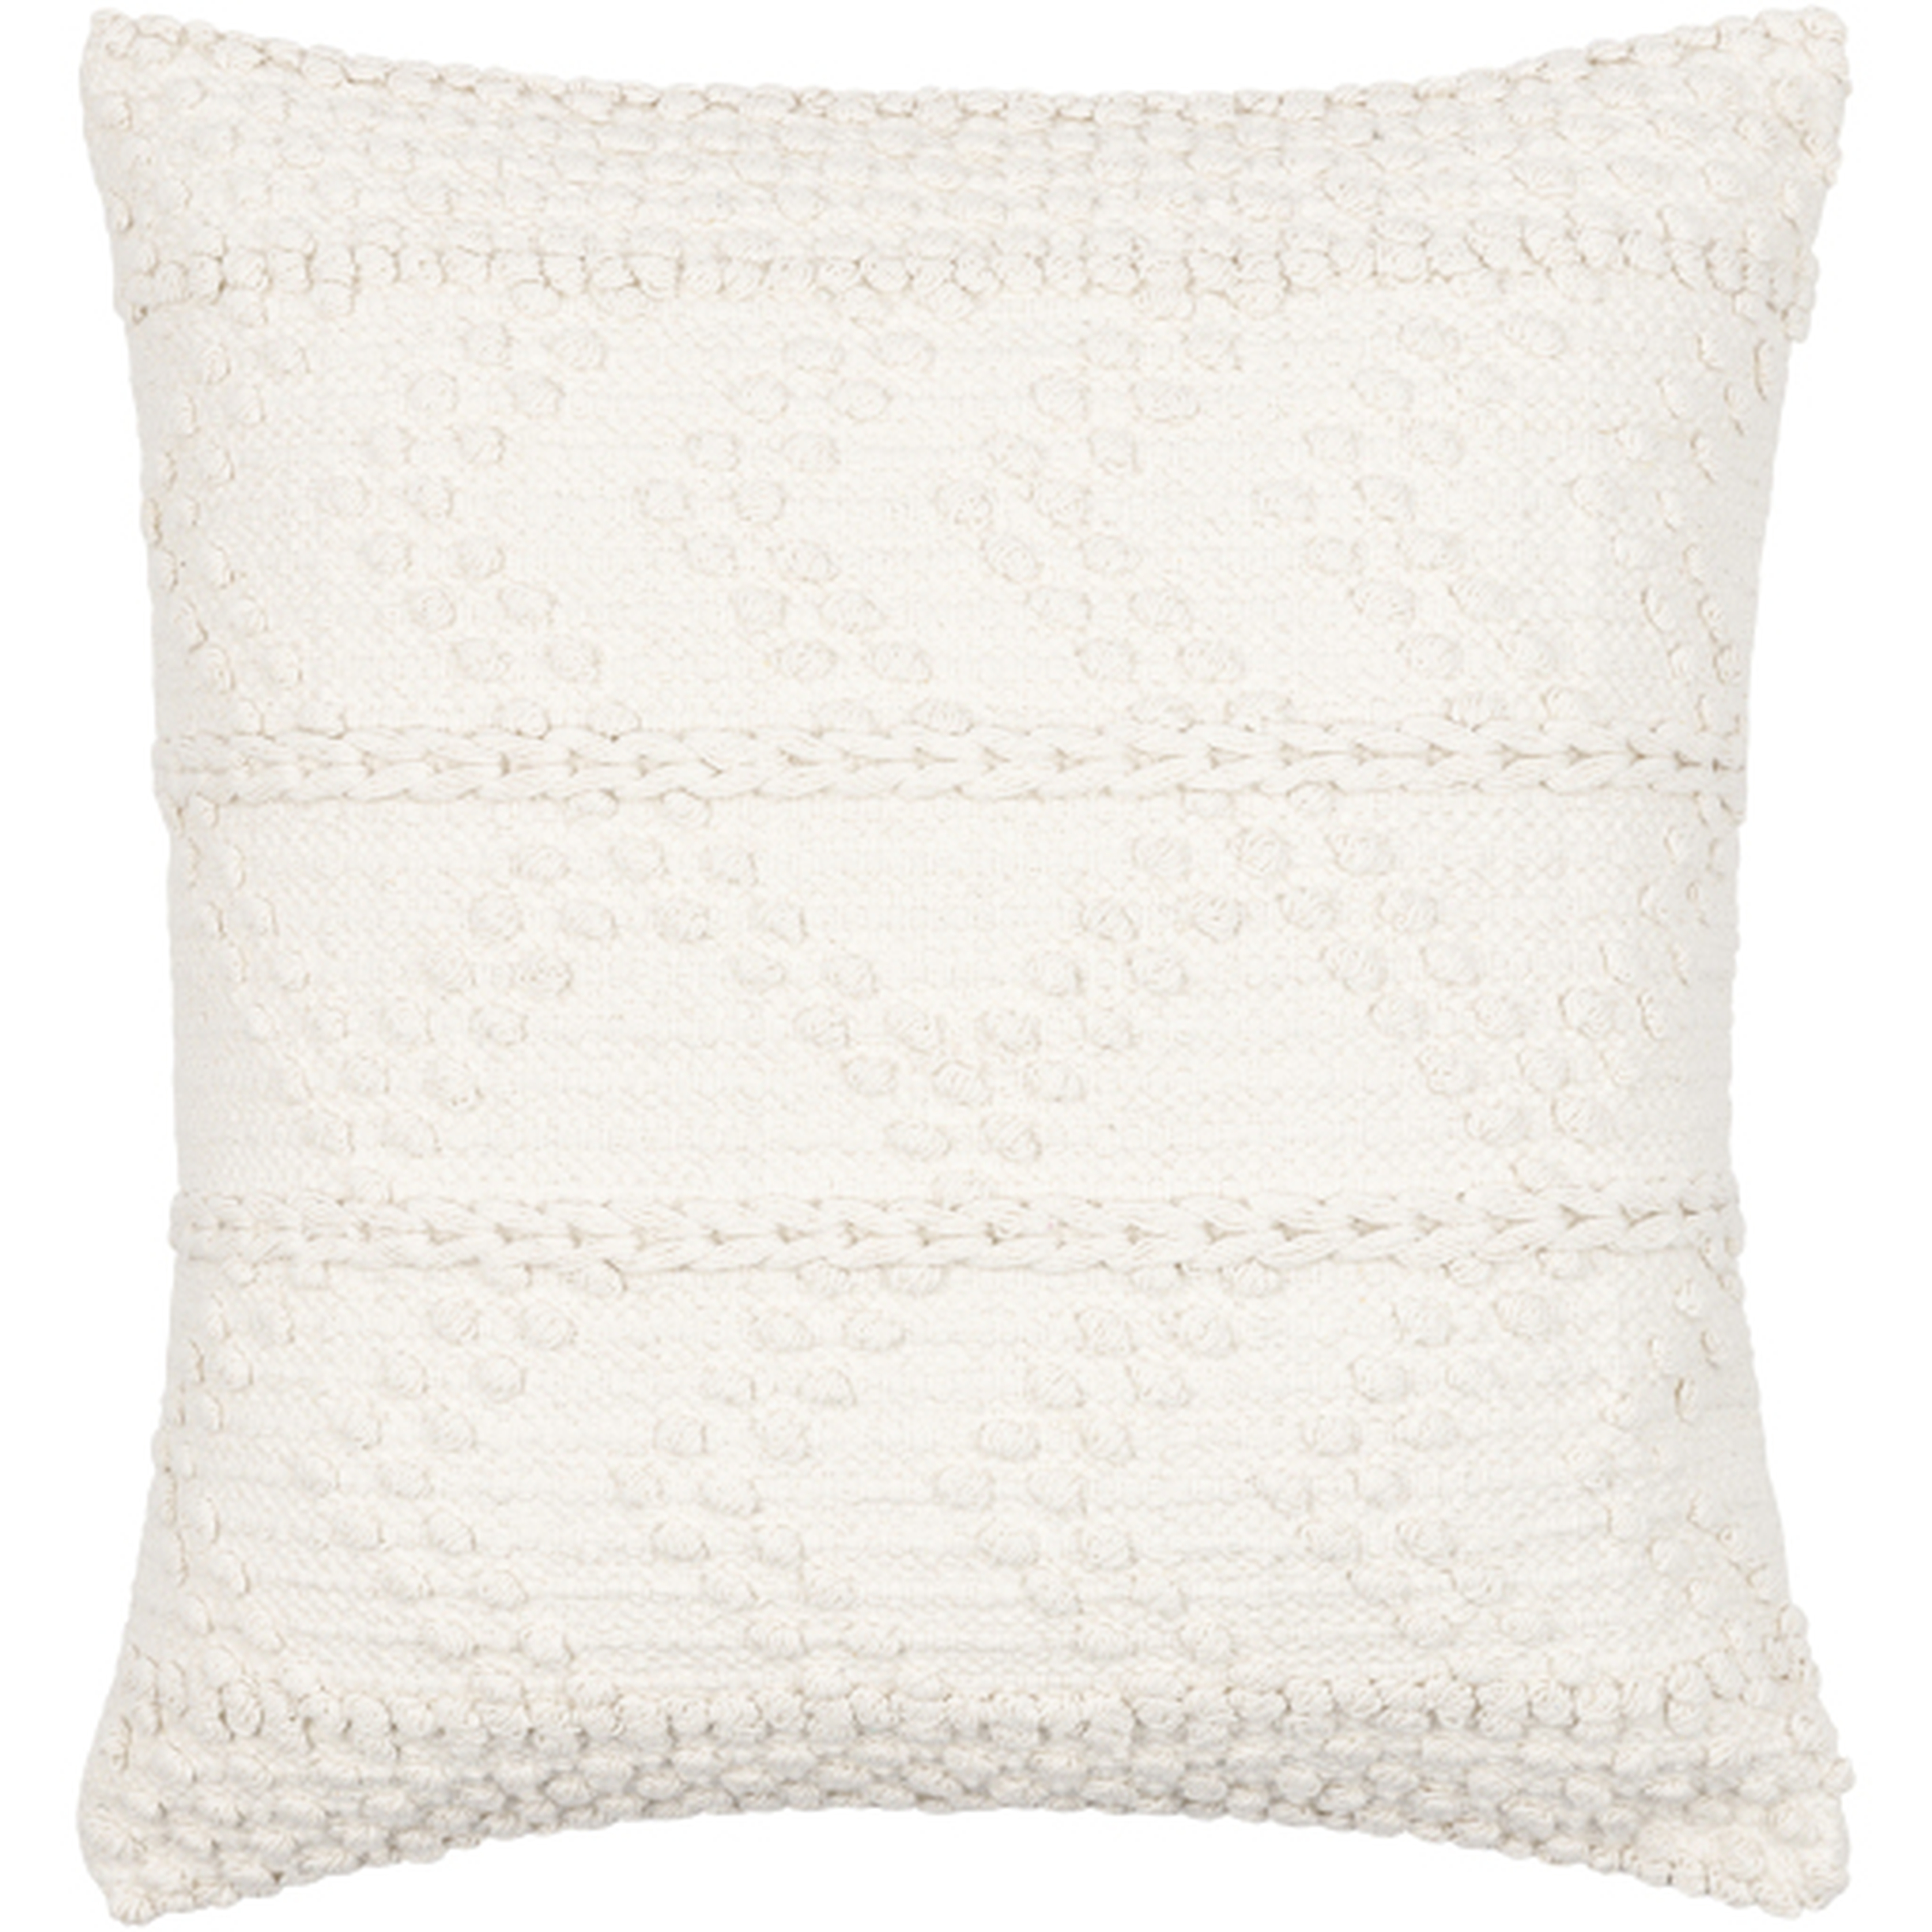 Merdo Throw Pillow, 20" x 20", with poly insert - Surya